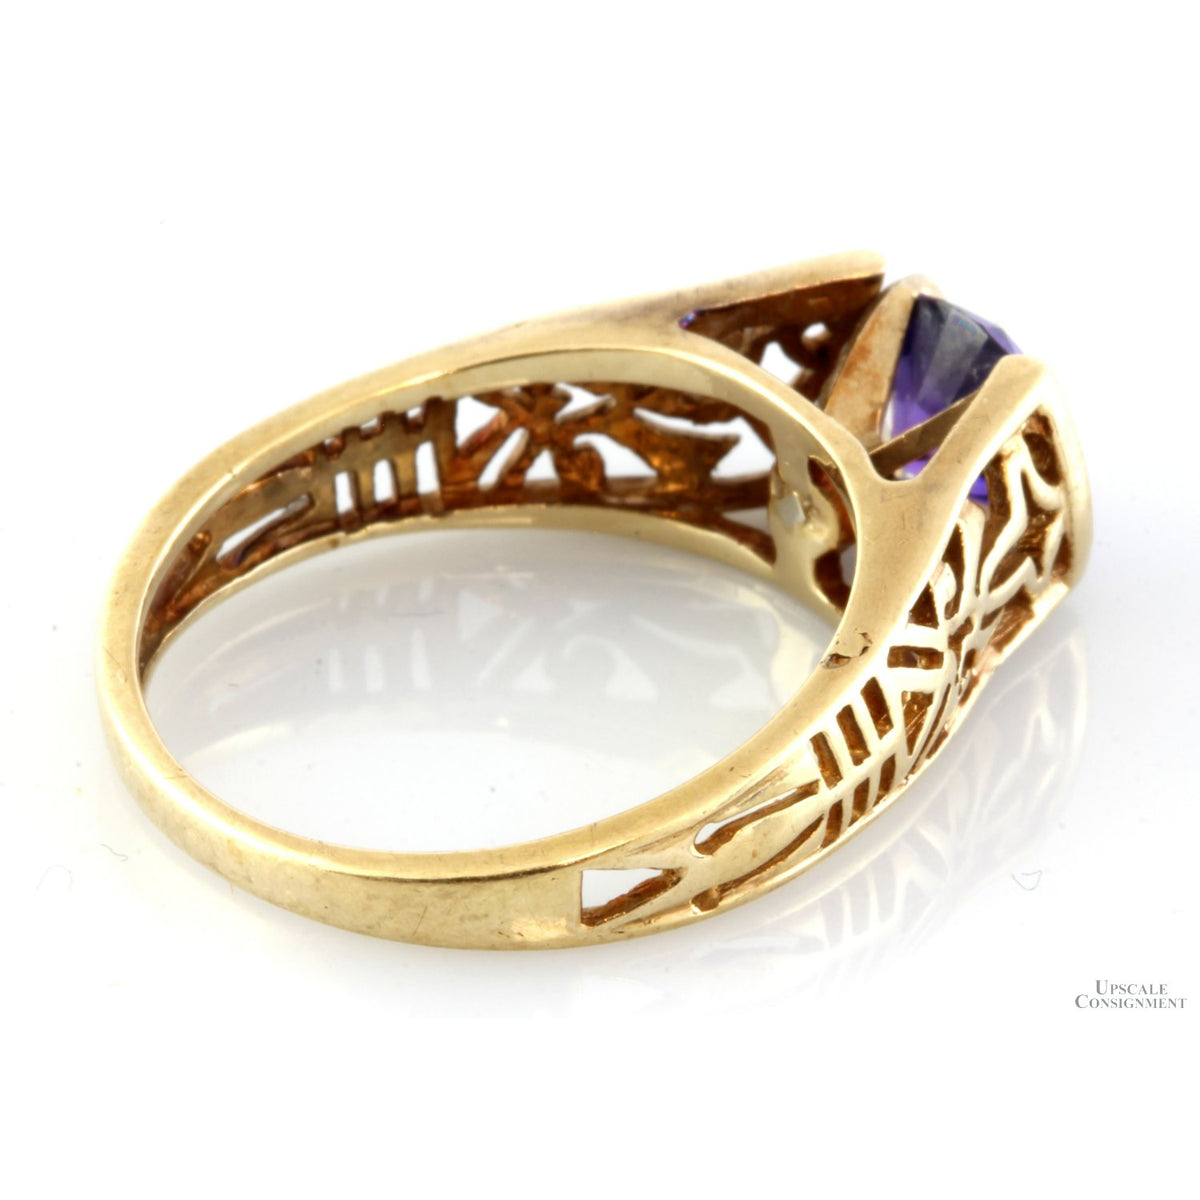 1.43ct Lab-Created Purple Sapphire 14K Yellow Gold Ring